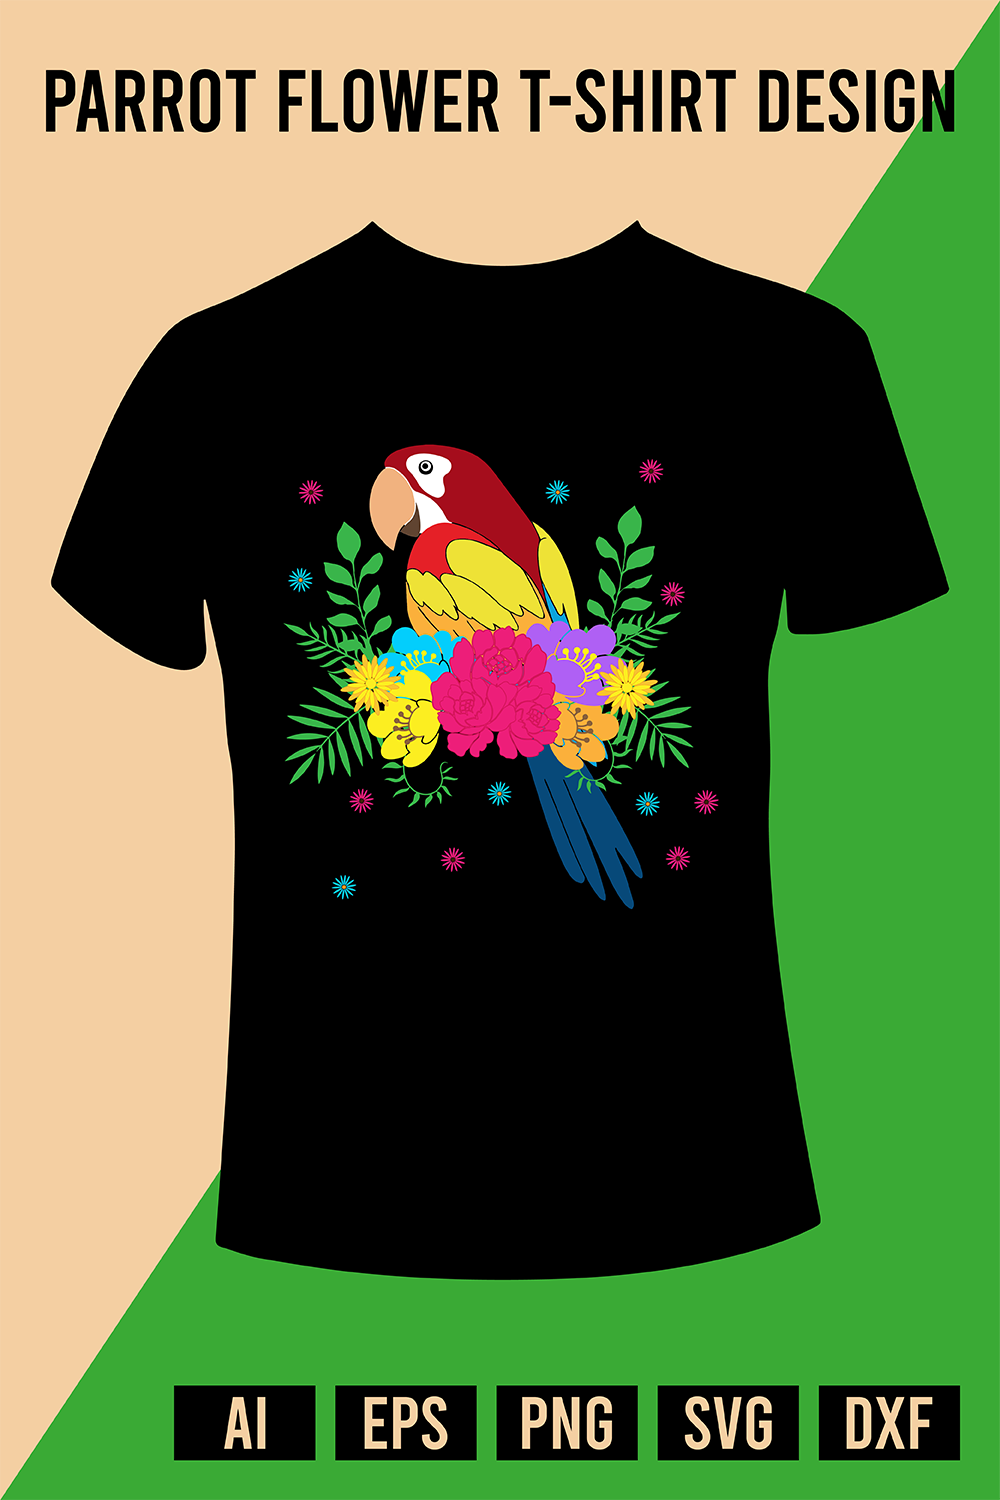 Parrot Flower T-Shirt Design pinterest preview image.